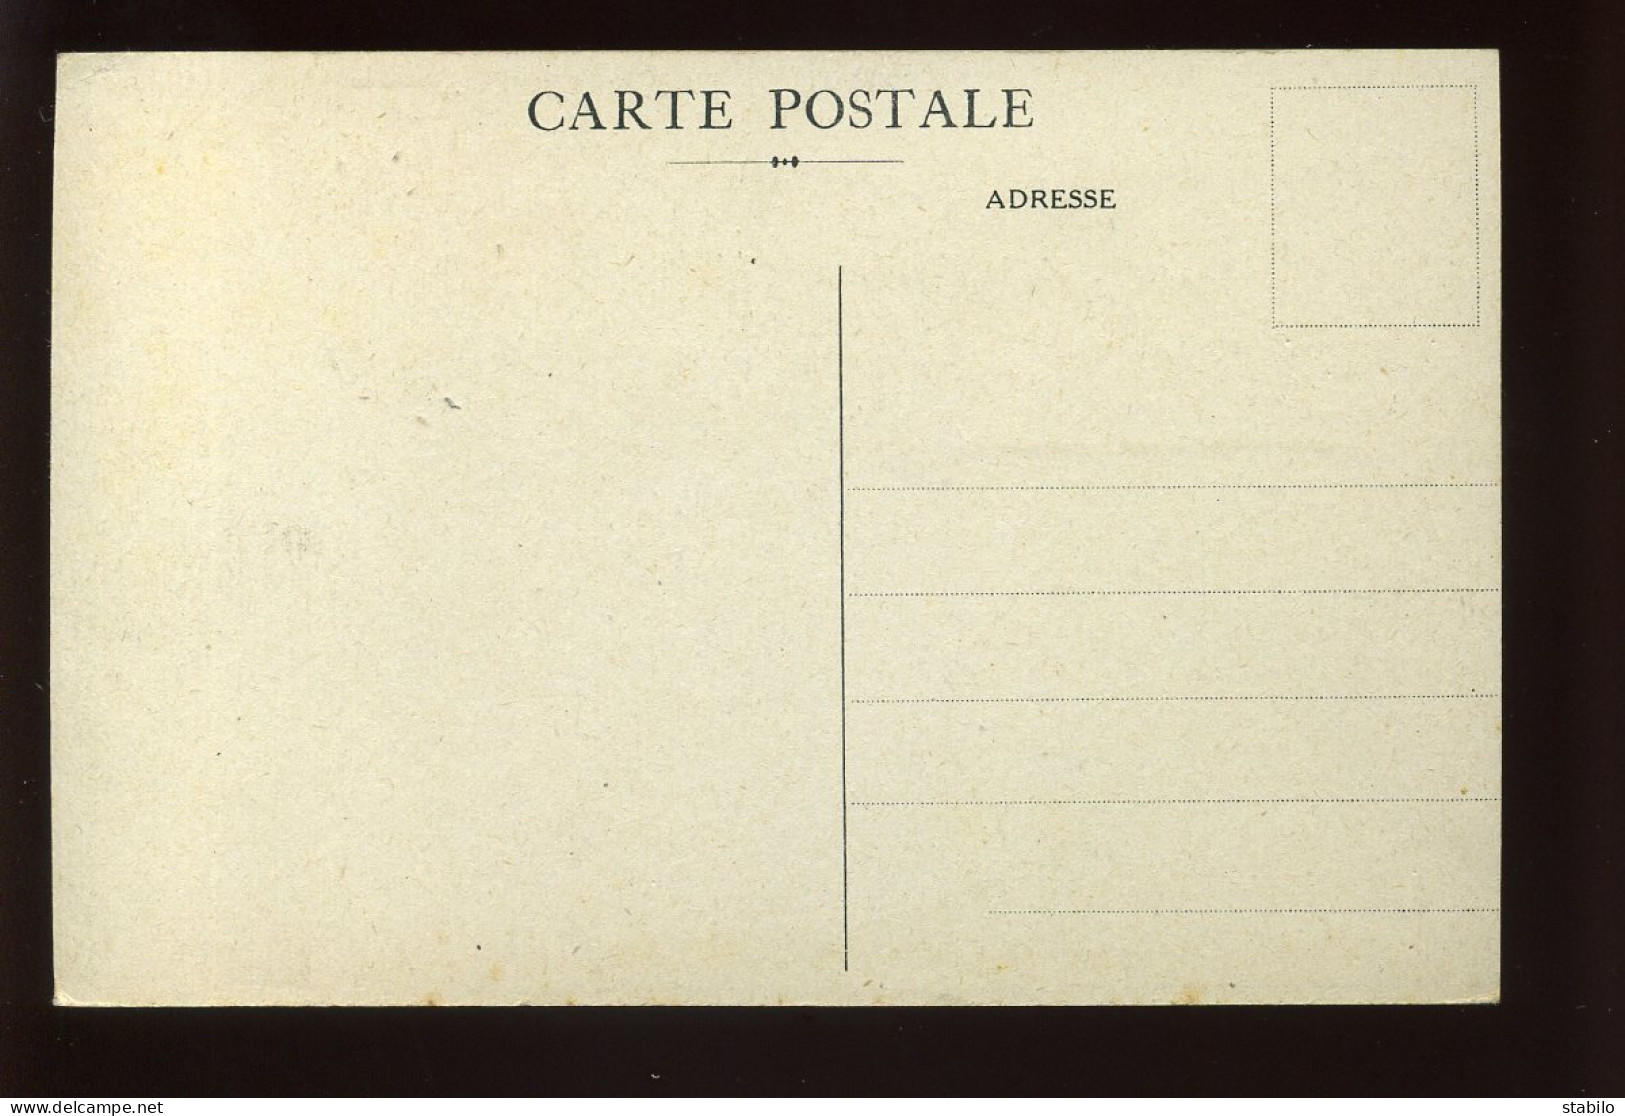 PUBLICITE - PARFUMERIE GELLE FRERES - 6 AVENUE DE L'OPERA - PARIS 1ER - Werbepostkarten